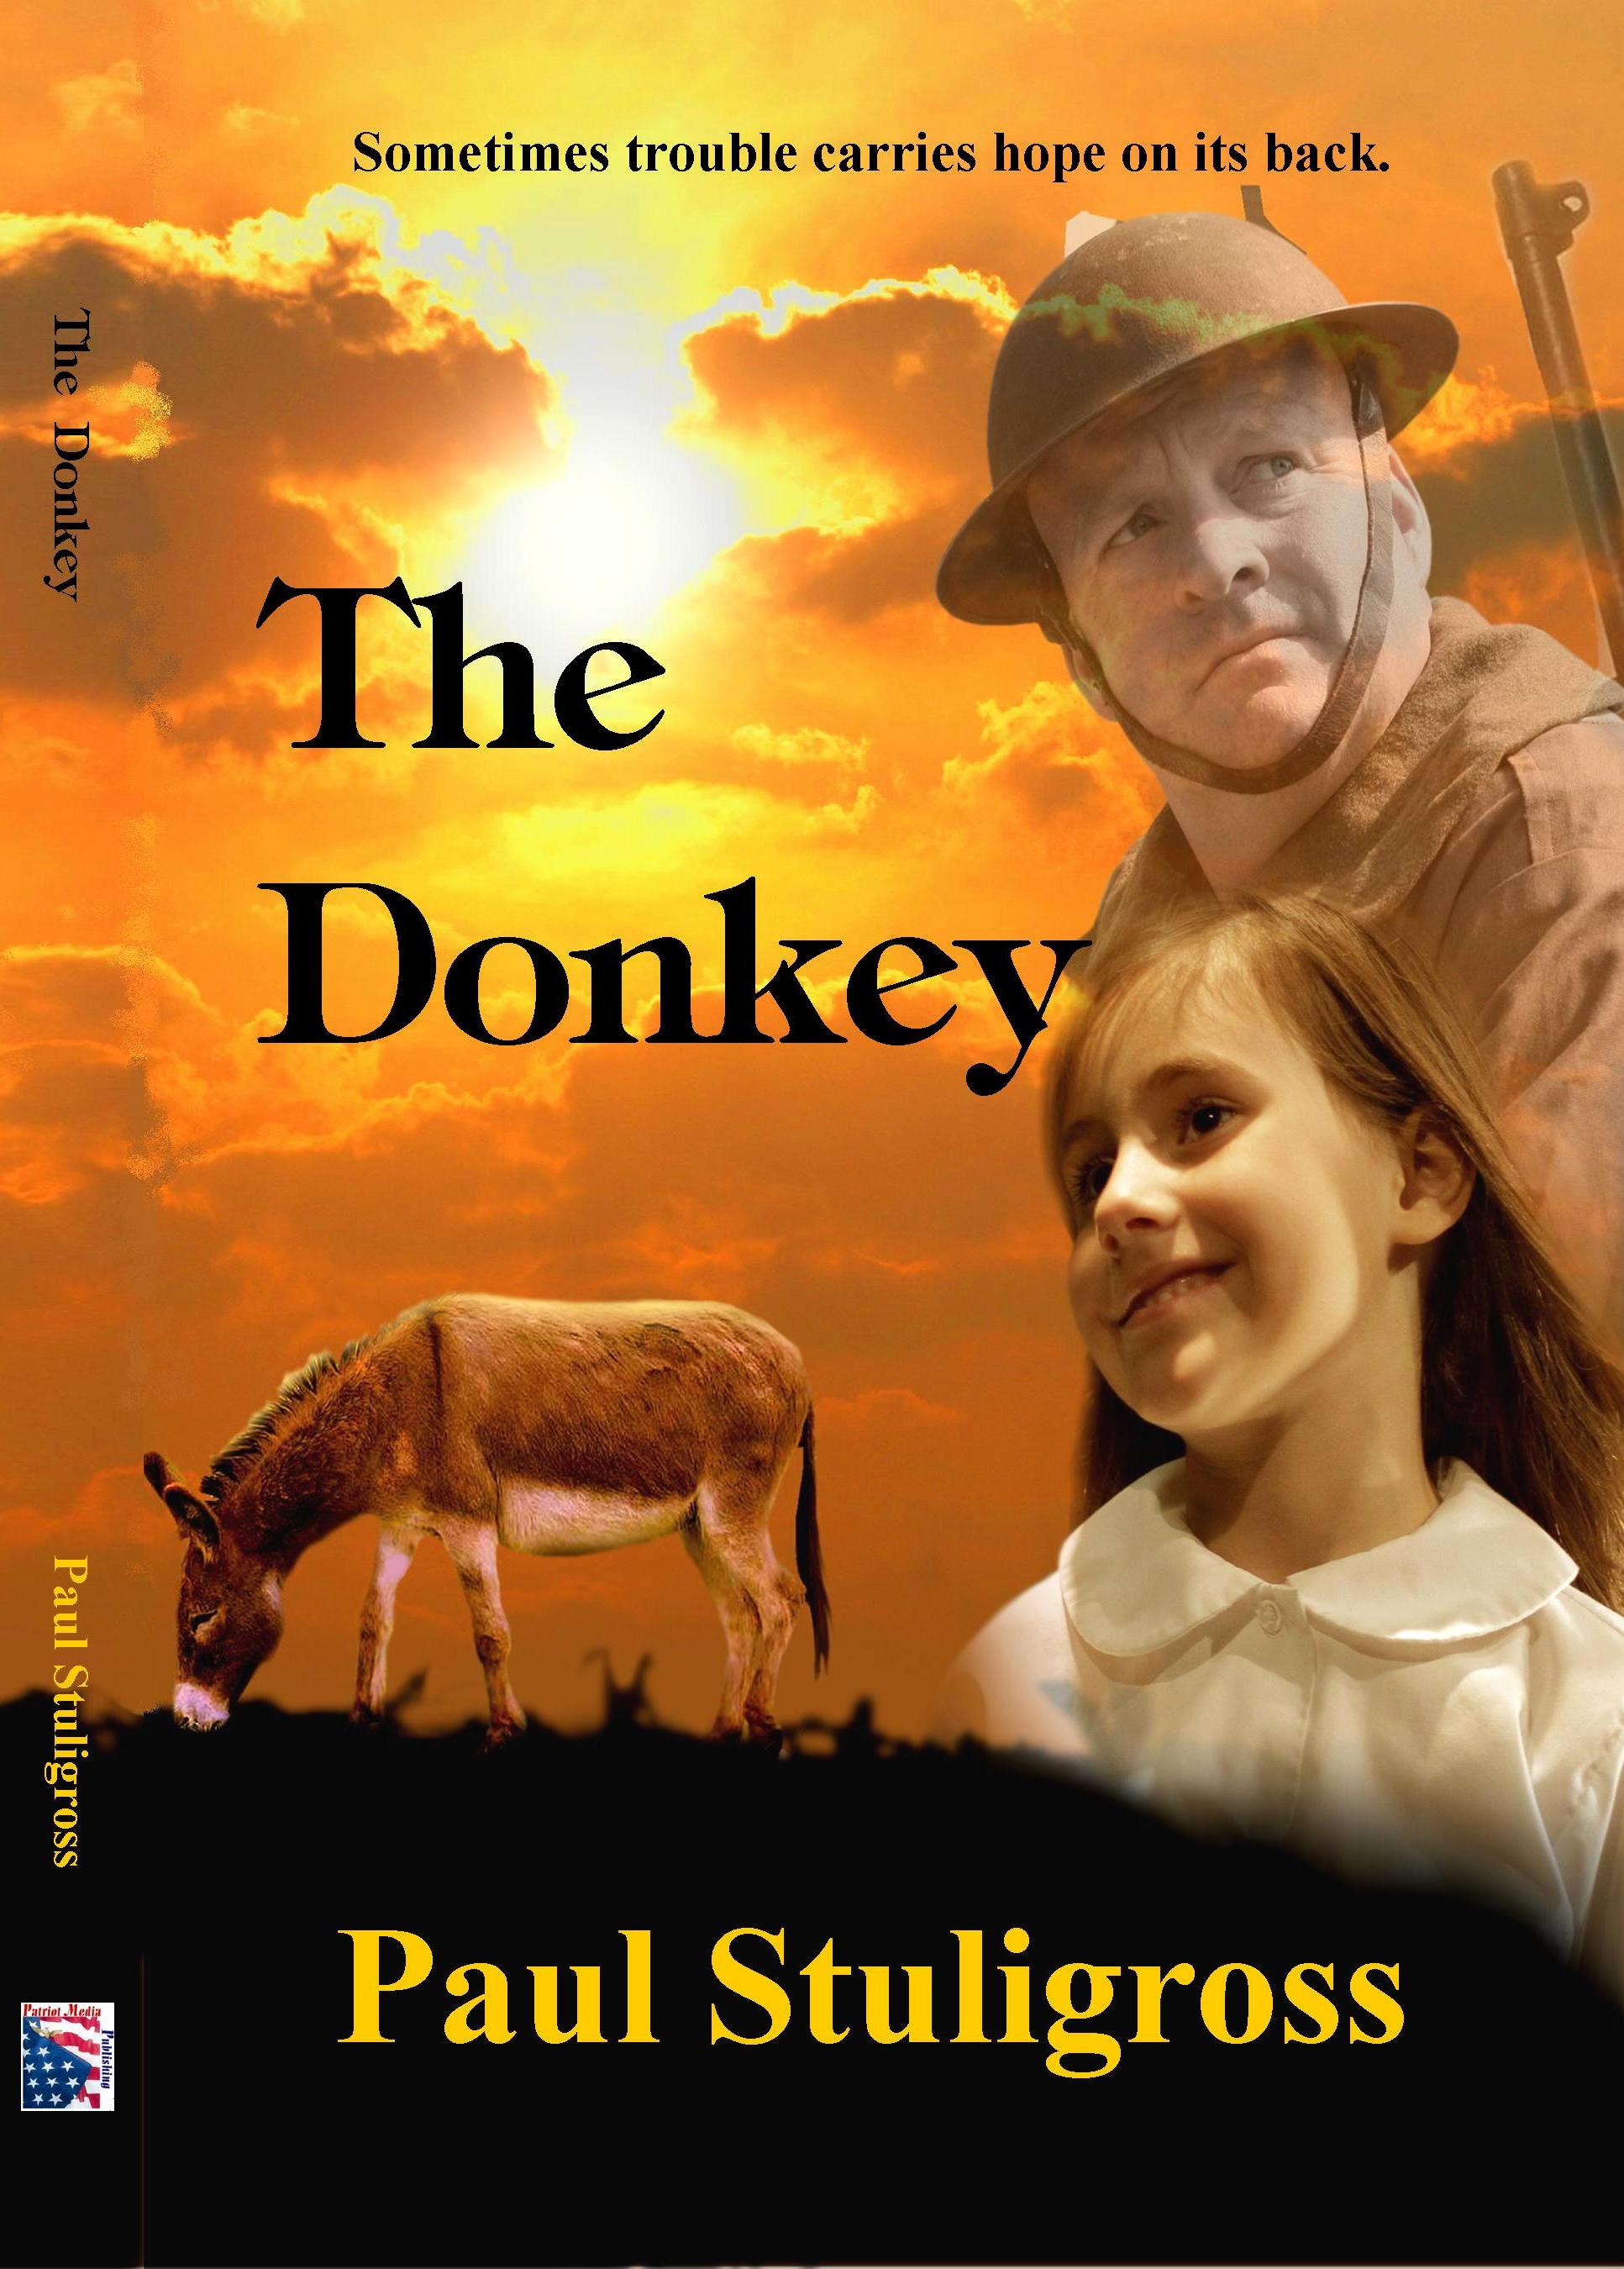 The Donkey by Paul Stuligross